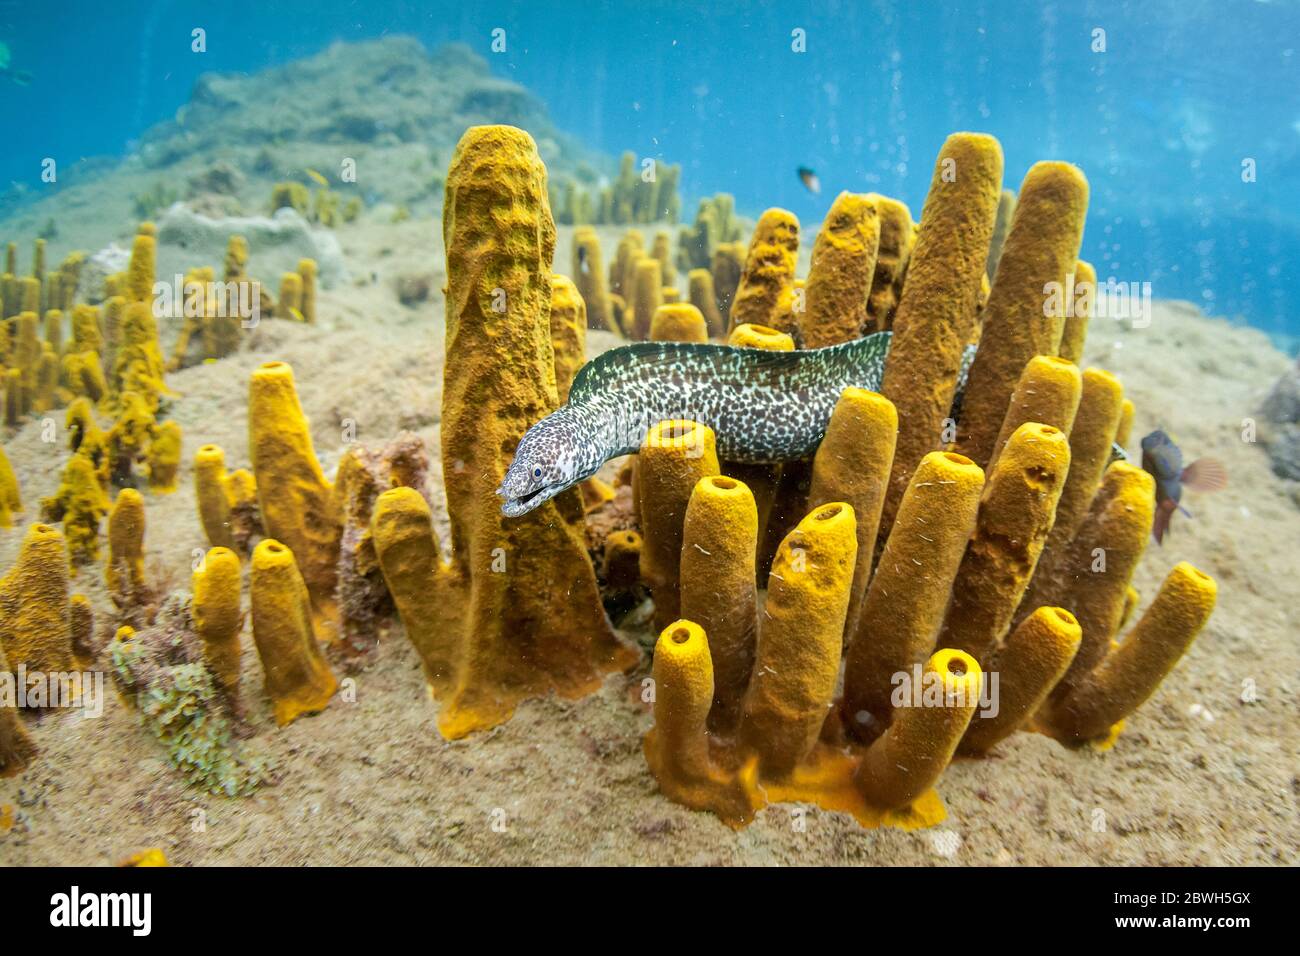 spotted moray, or black spotted moray eel, Gymnothorax moringa, swimming among yellow tube sponges, Aplysina fistularis, Dominica, Caribbean Sea, Atla Stock Photo